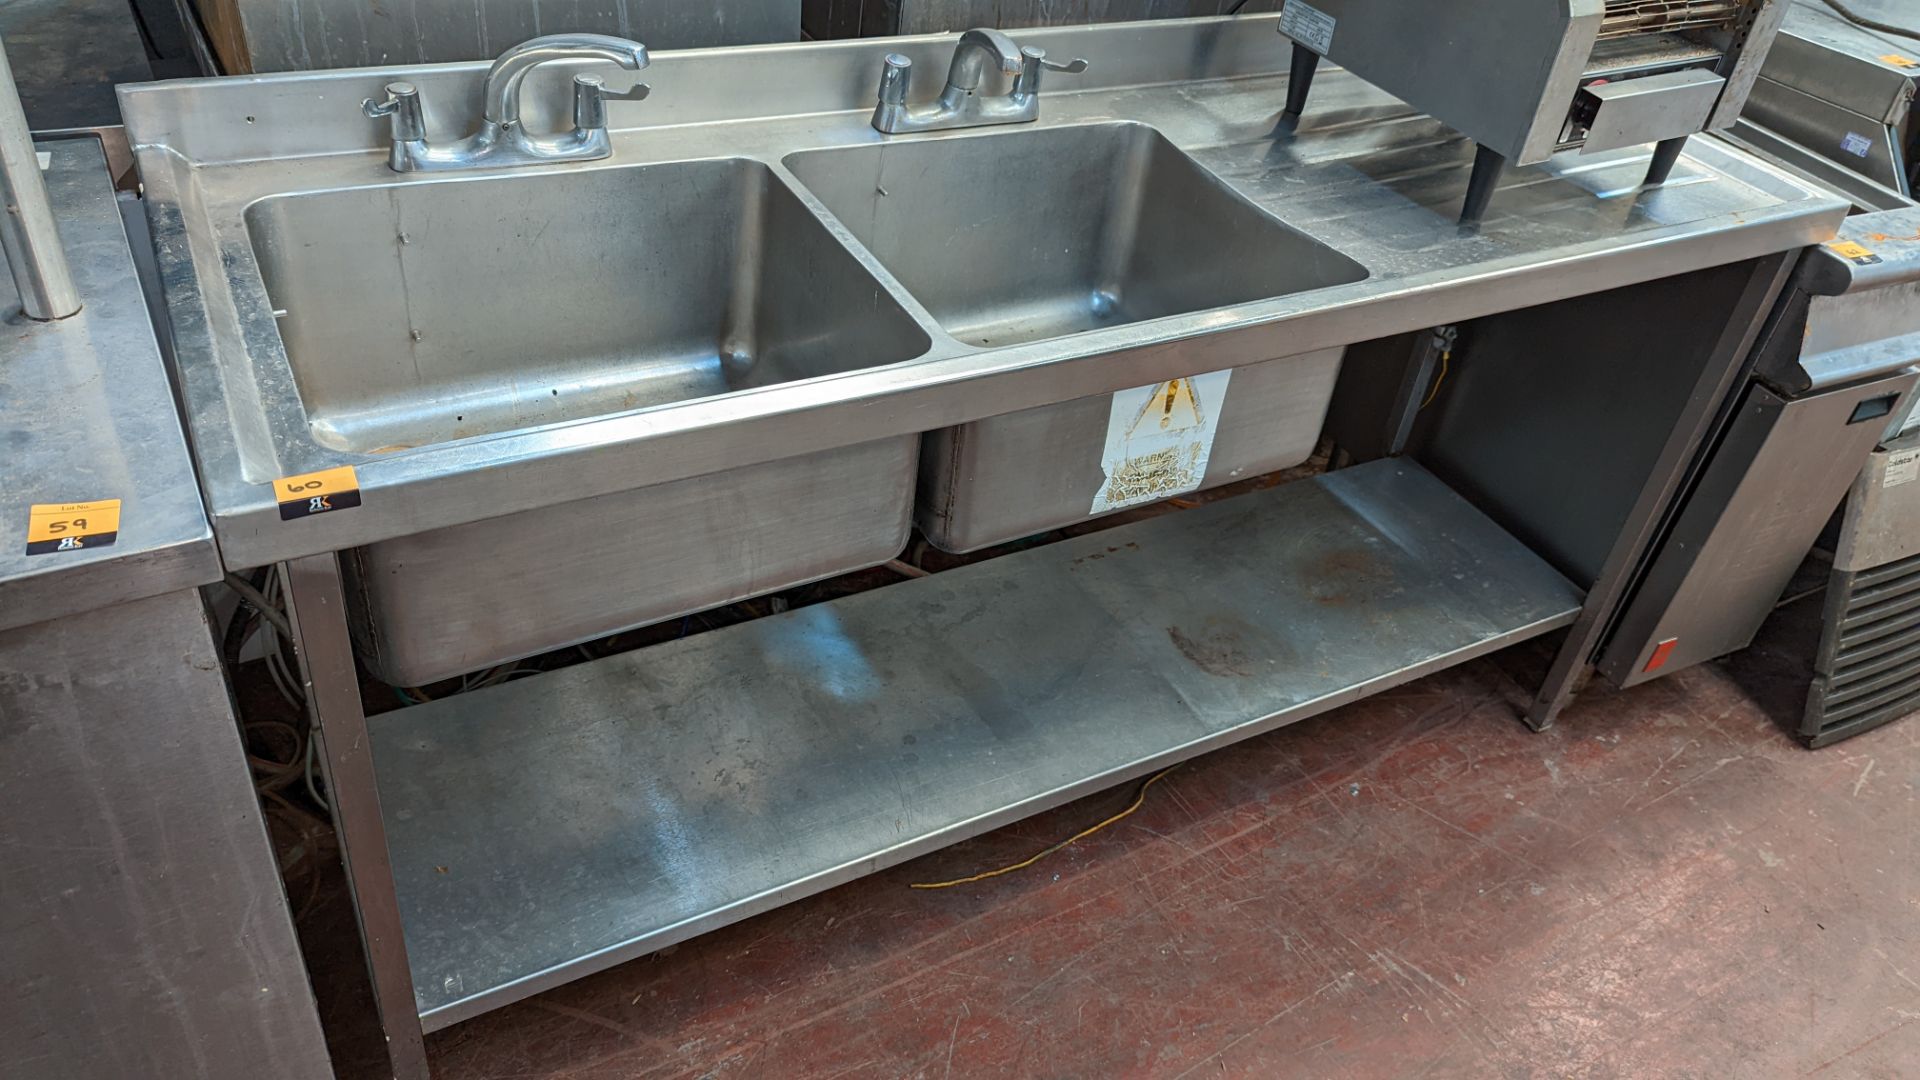 Stainless steel twin bowl sink arrangement incorporating mixer taps, drainer & shelf below - Image 3 of 4